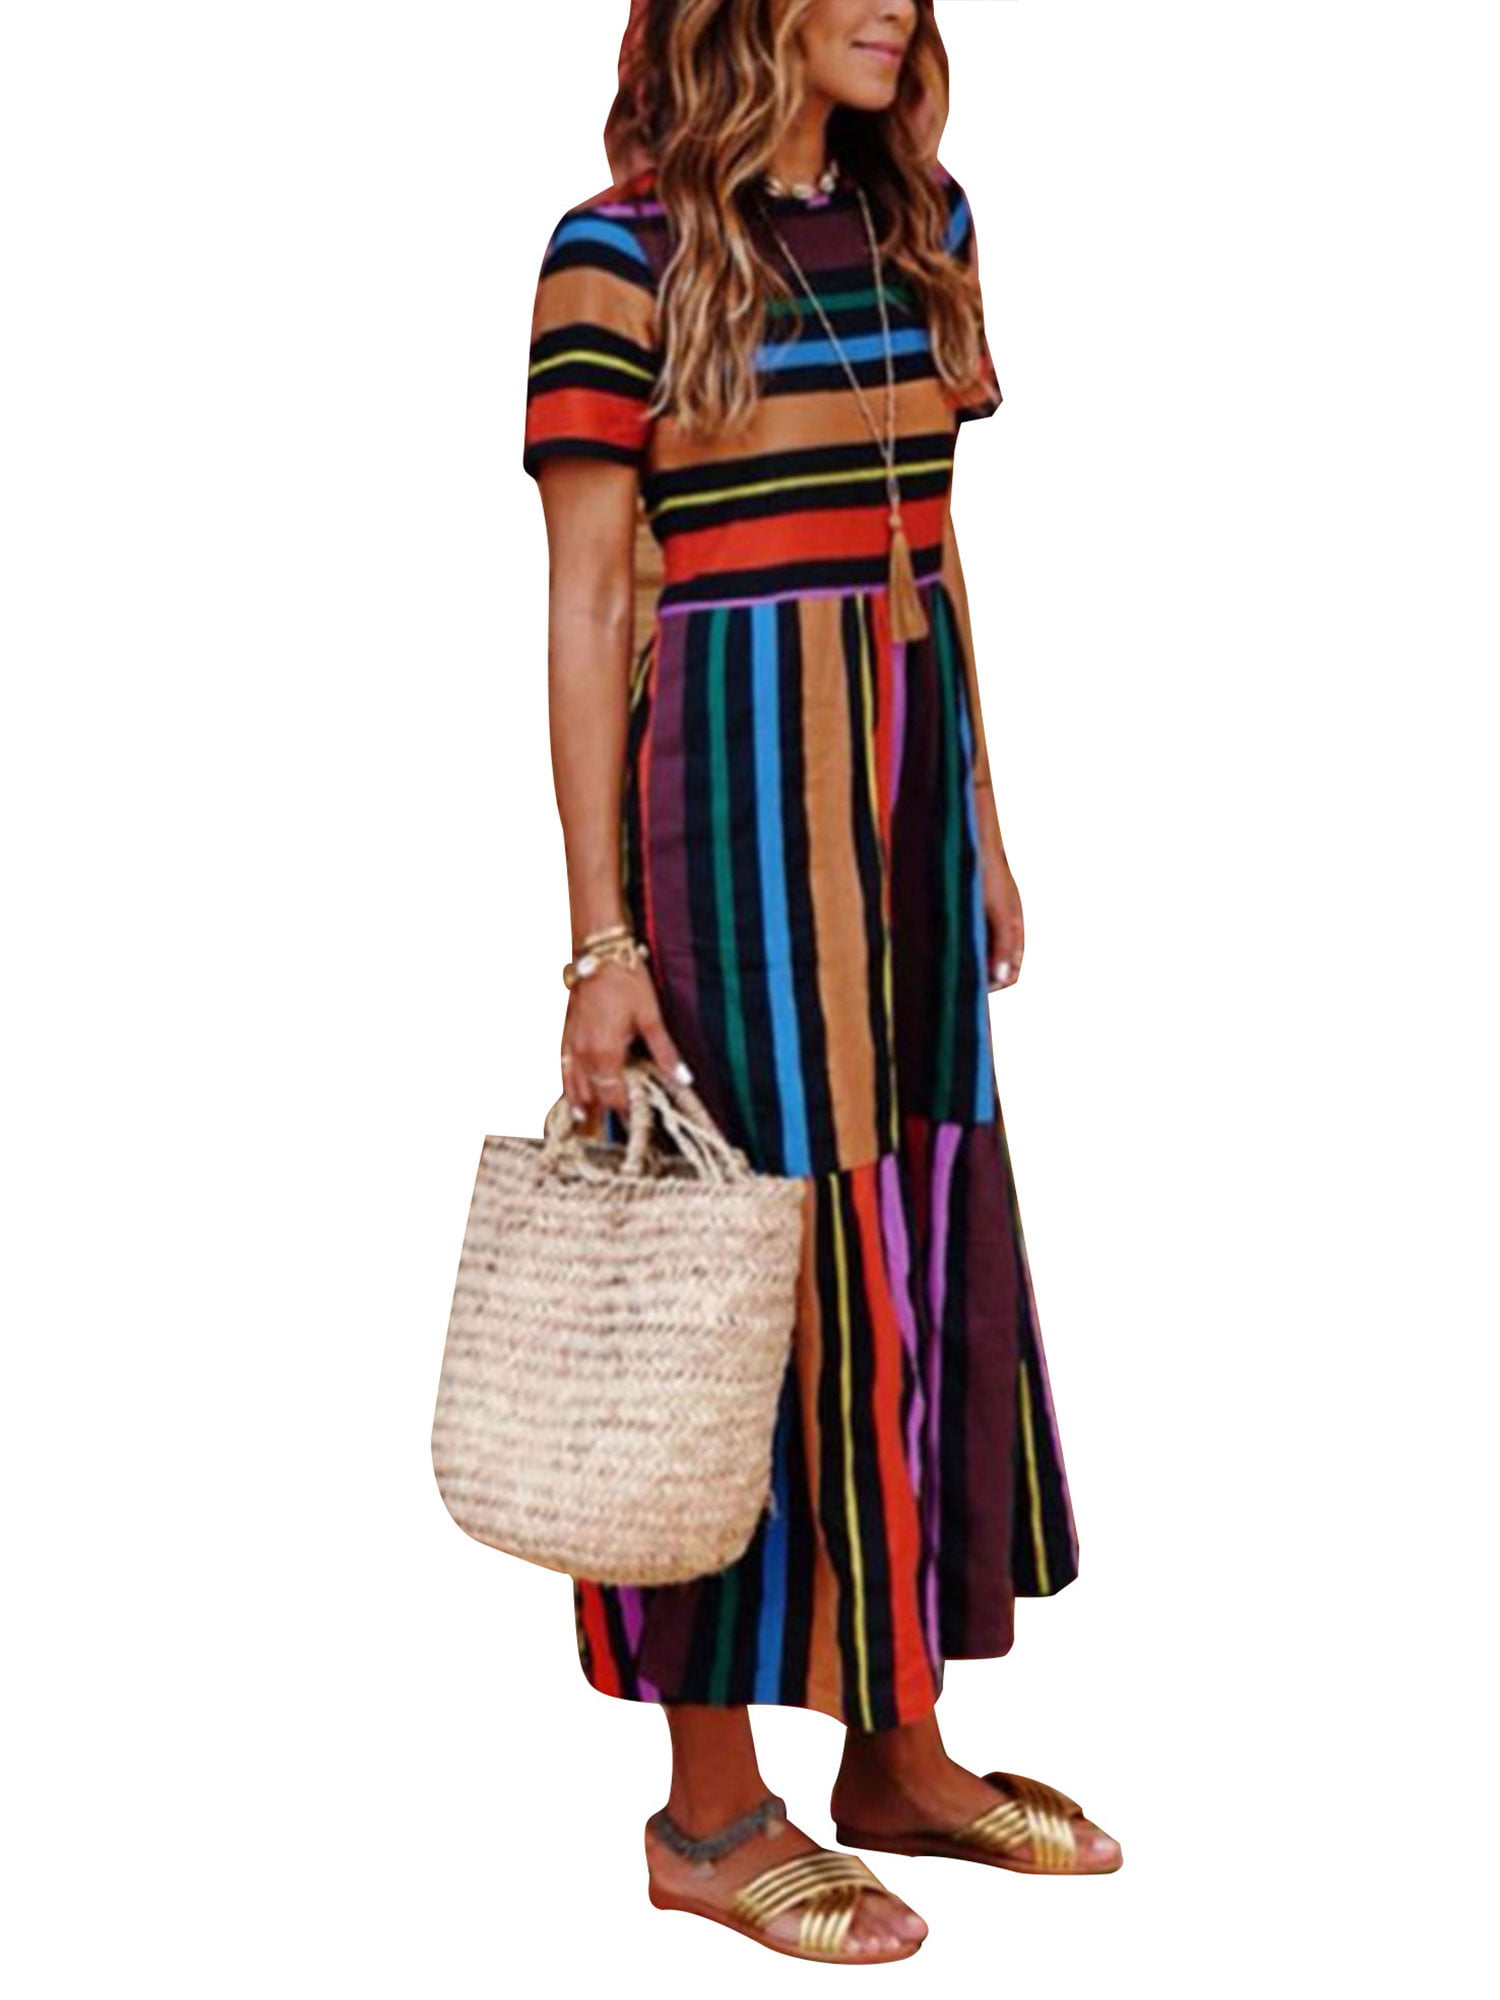 Oxodoi Hippie Soul Print Dress for Women Loose Daliy Boho Long Maxi Dress Casual Sleeveless Sundress Party Beach Tunic Dress